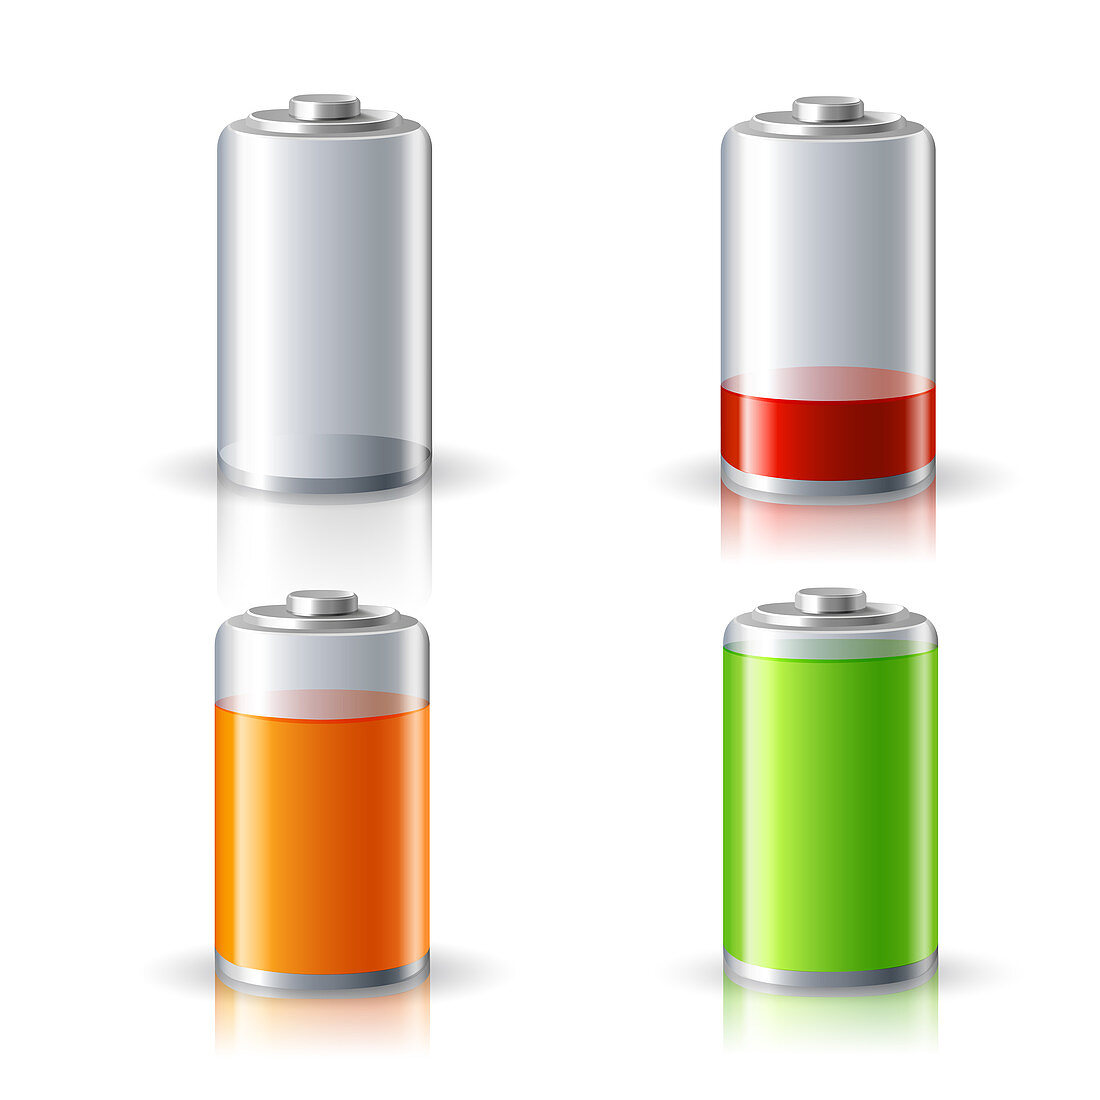 Battery icons, illustration